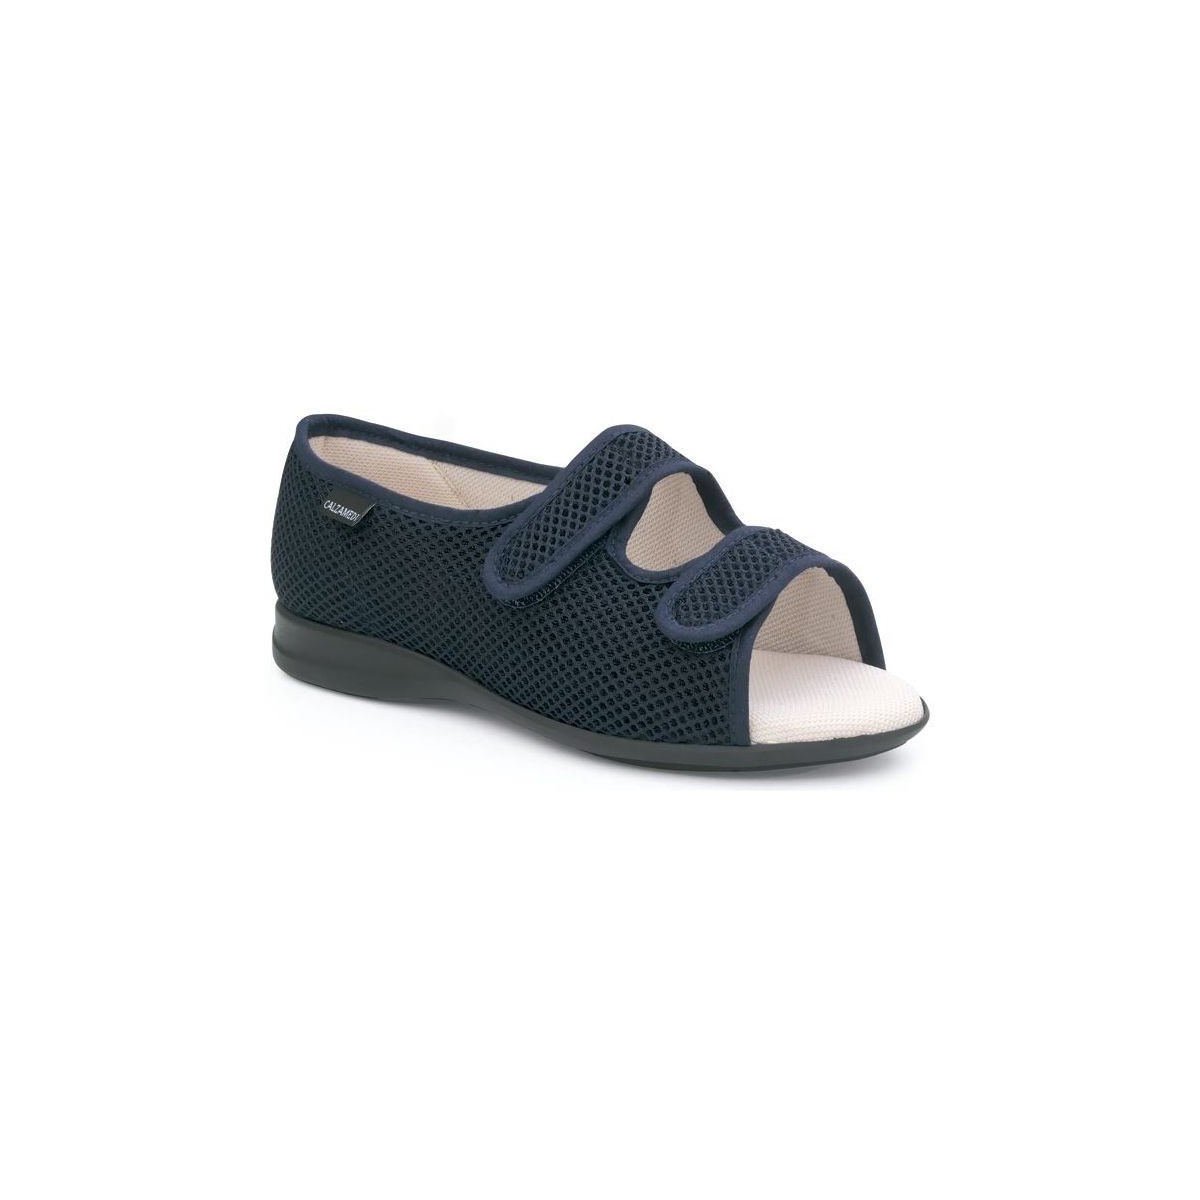 Schuhe Hausschuhe Calzamedi offenen Klett orthopädische Sandale Blau